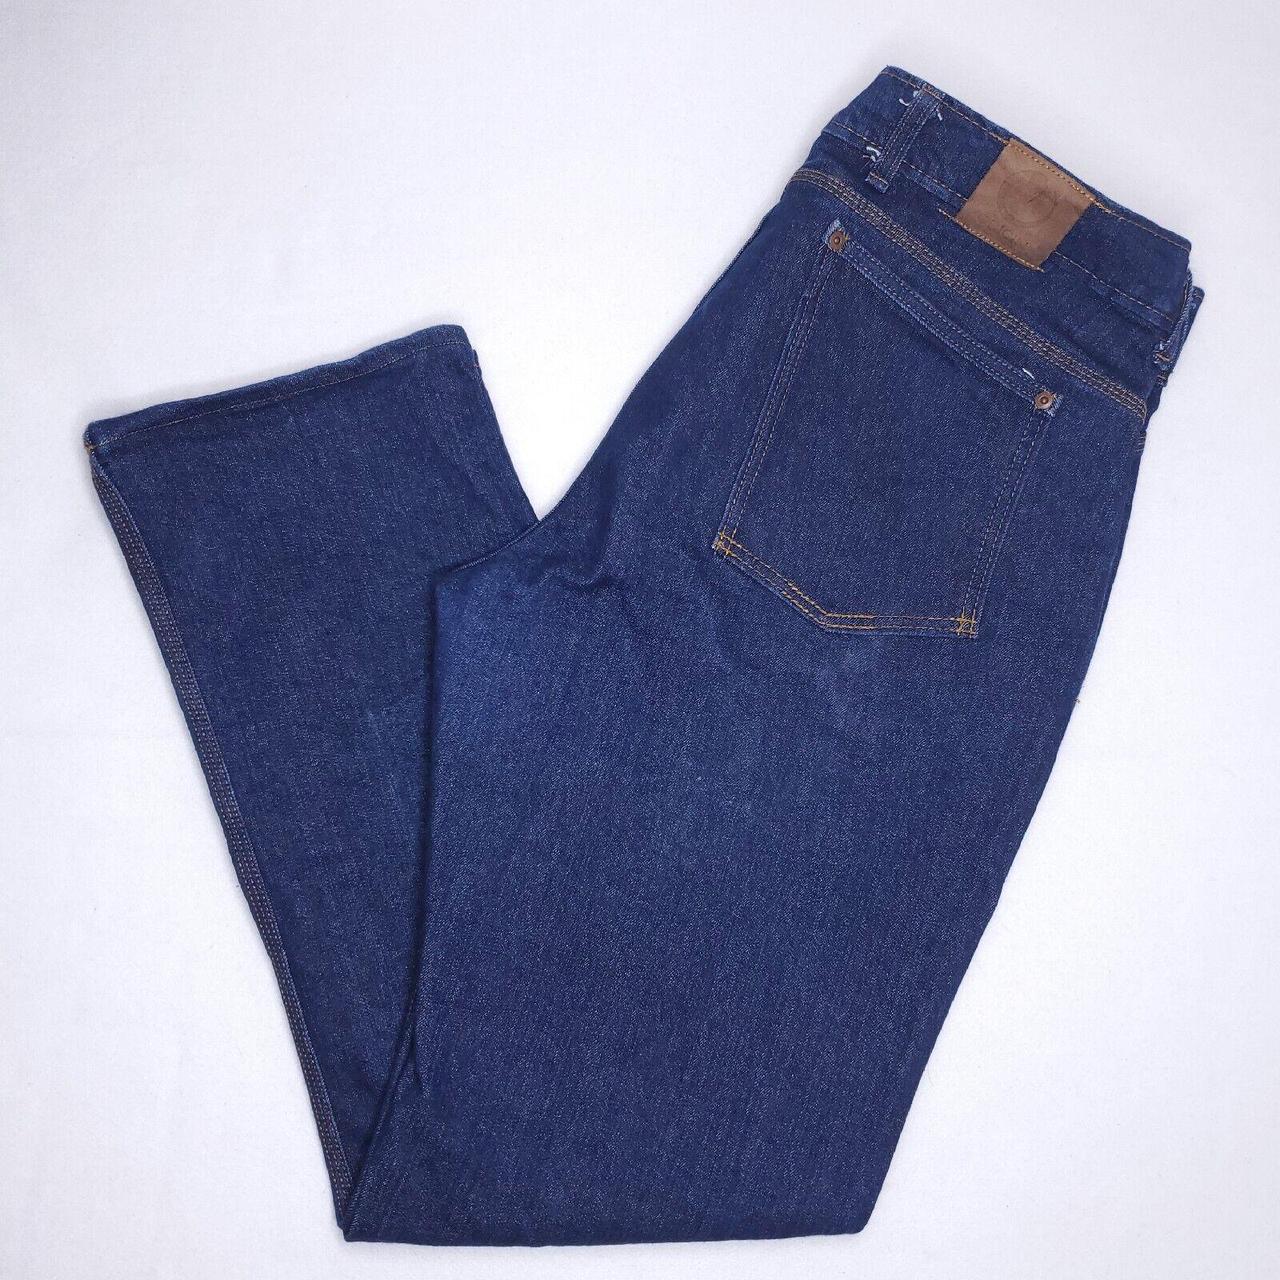 ORIGIN Maine Factory Denim Jeans 40x34 Dark Indigo... - Depop